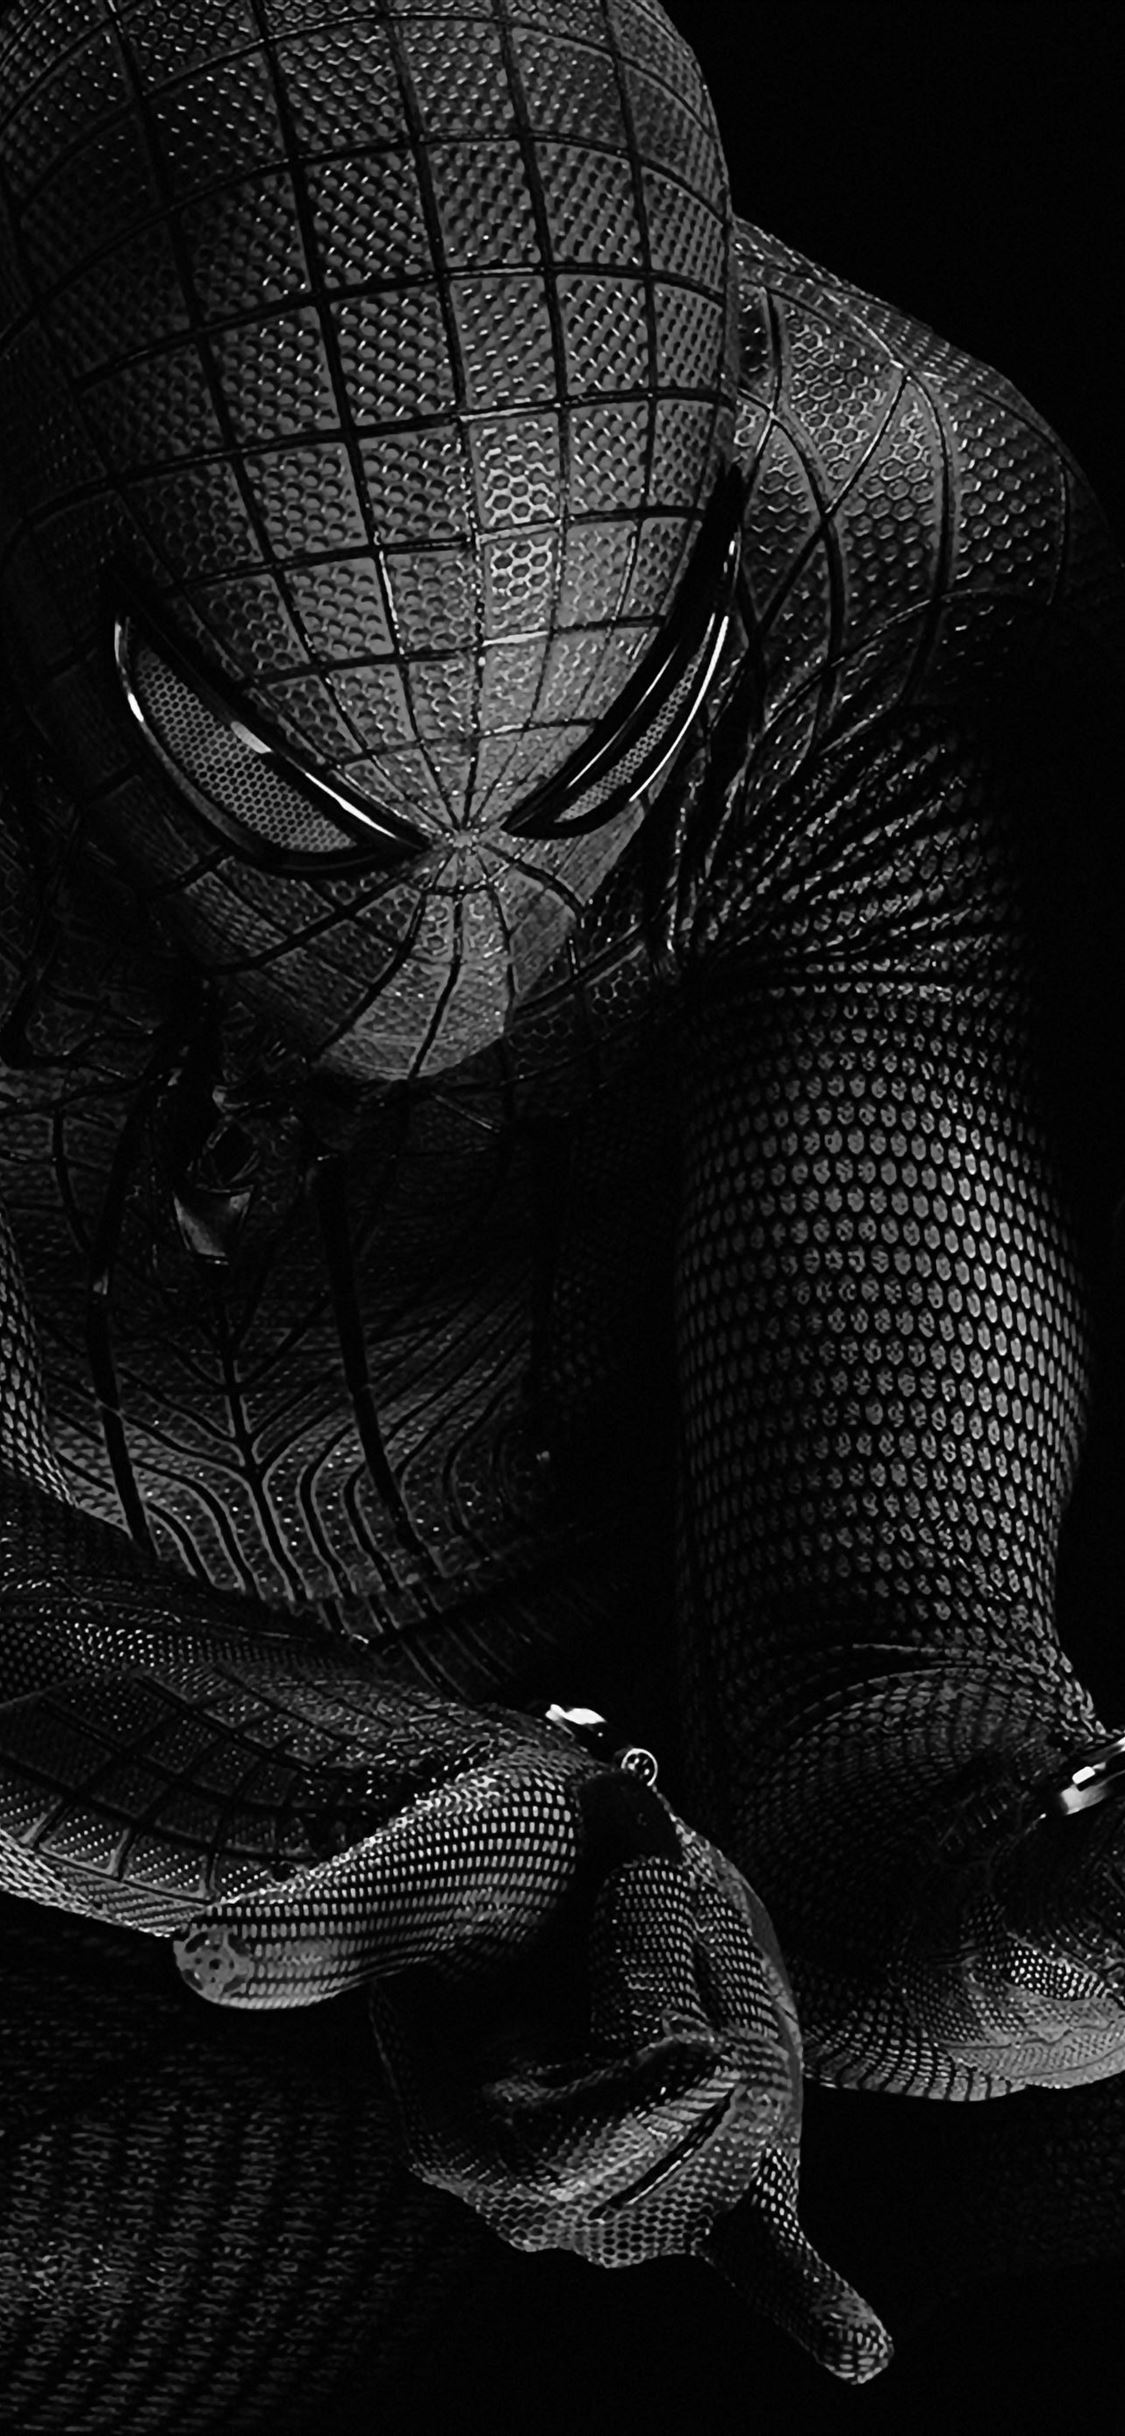 Spiderman Hero Dark Bw Art Illustration iPhone wallpaper 